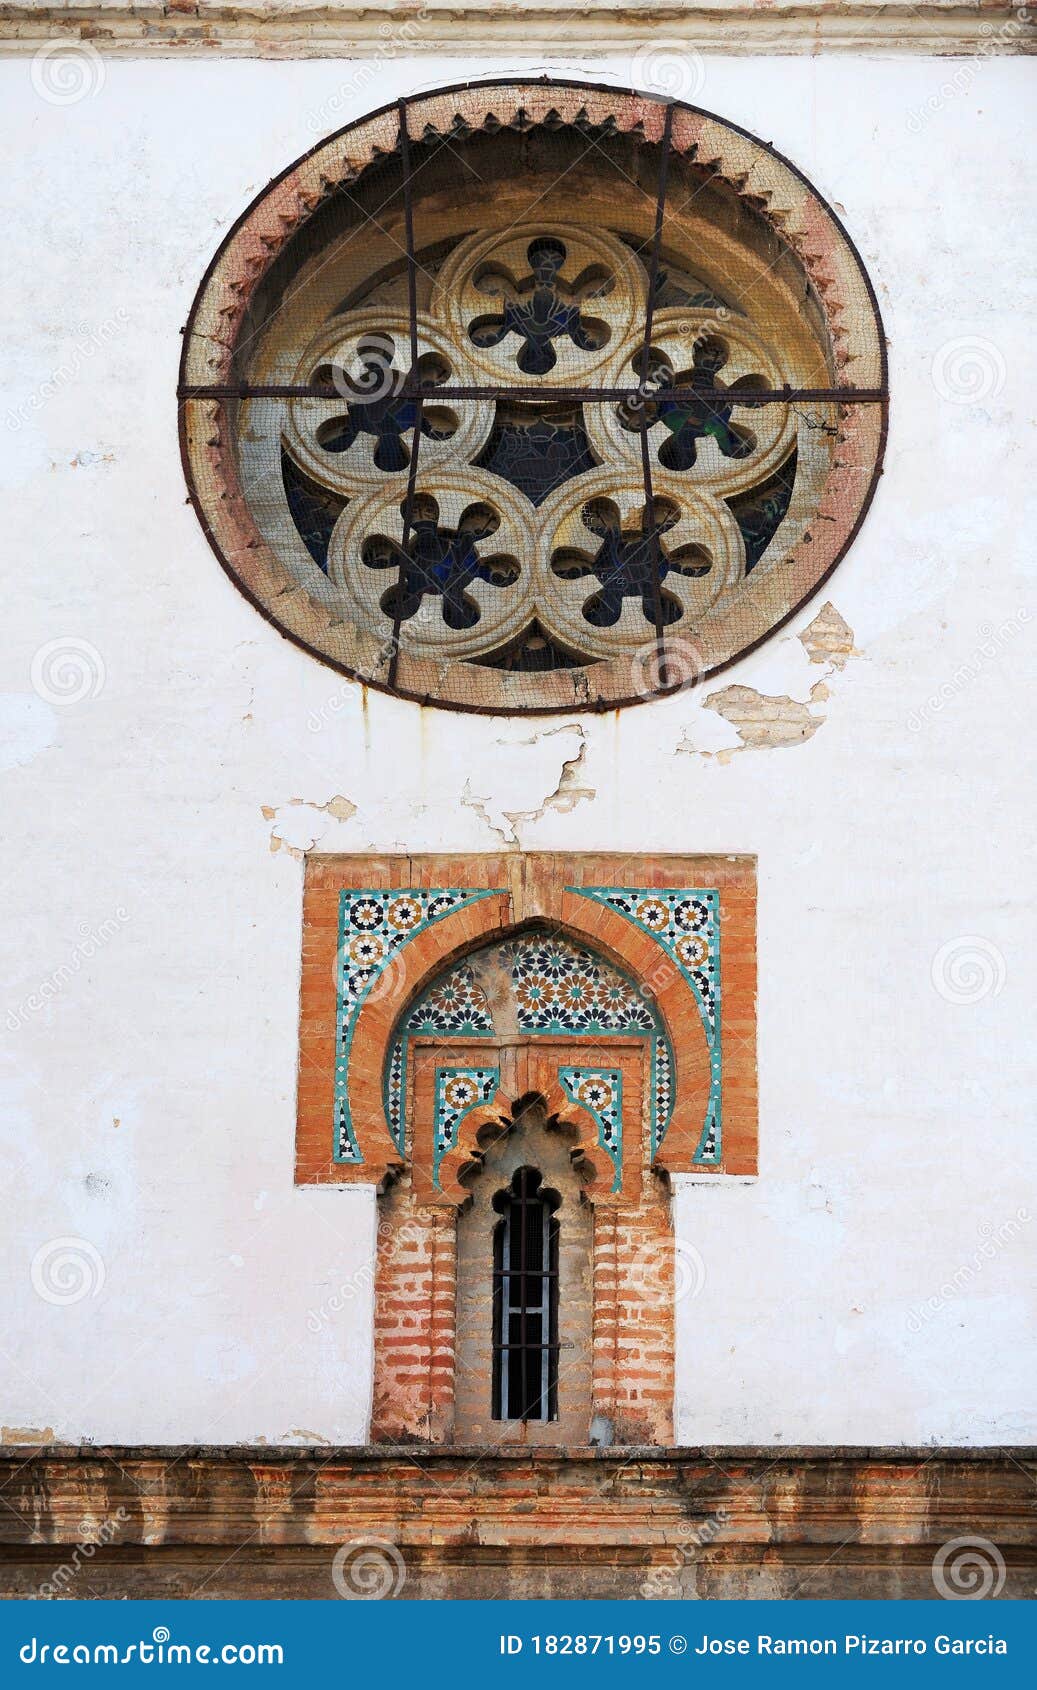 mudejar style window with tiles -alicatados-  and rose window of the church of omnium sanctorum in seville, spain